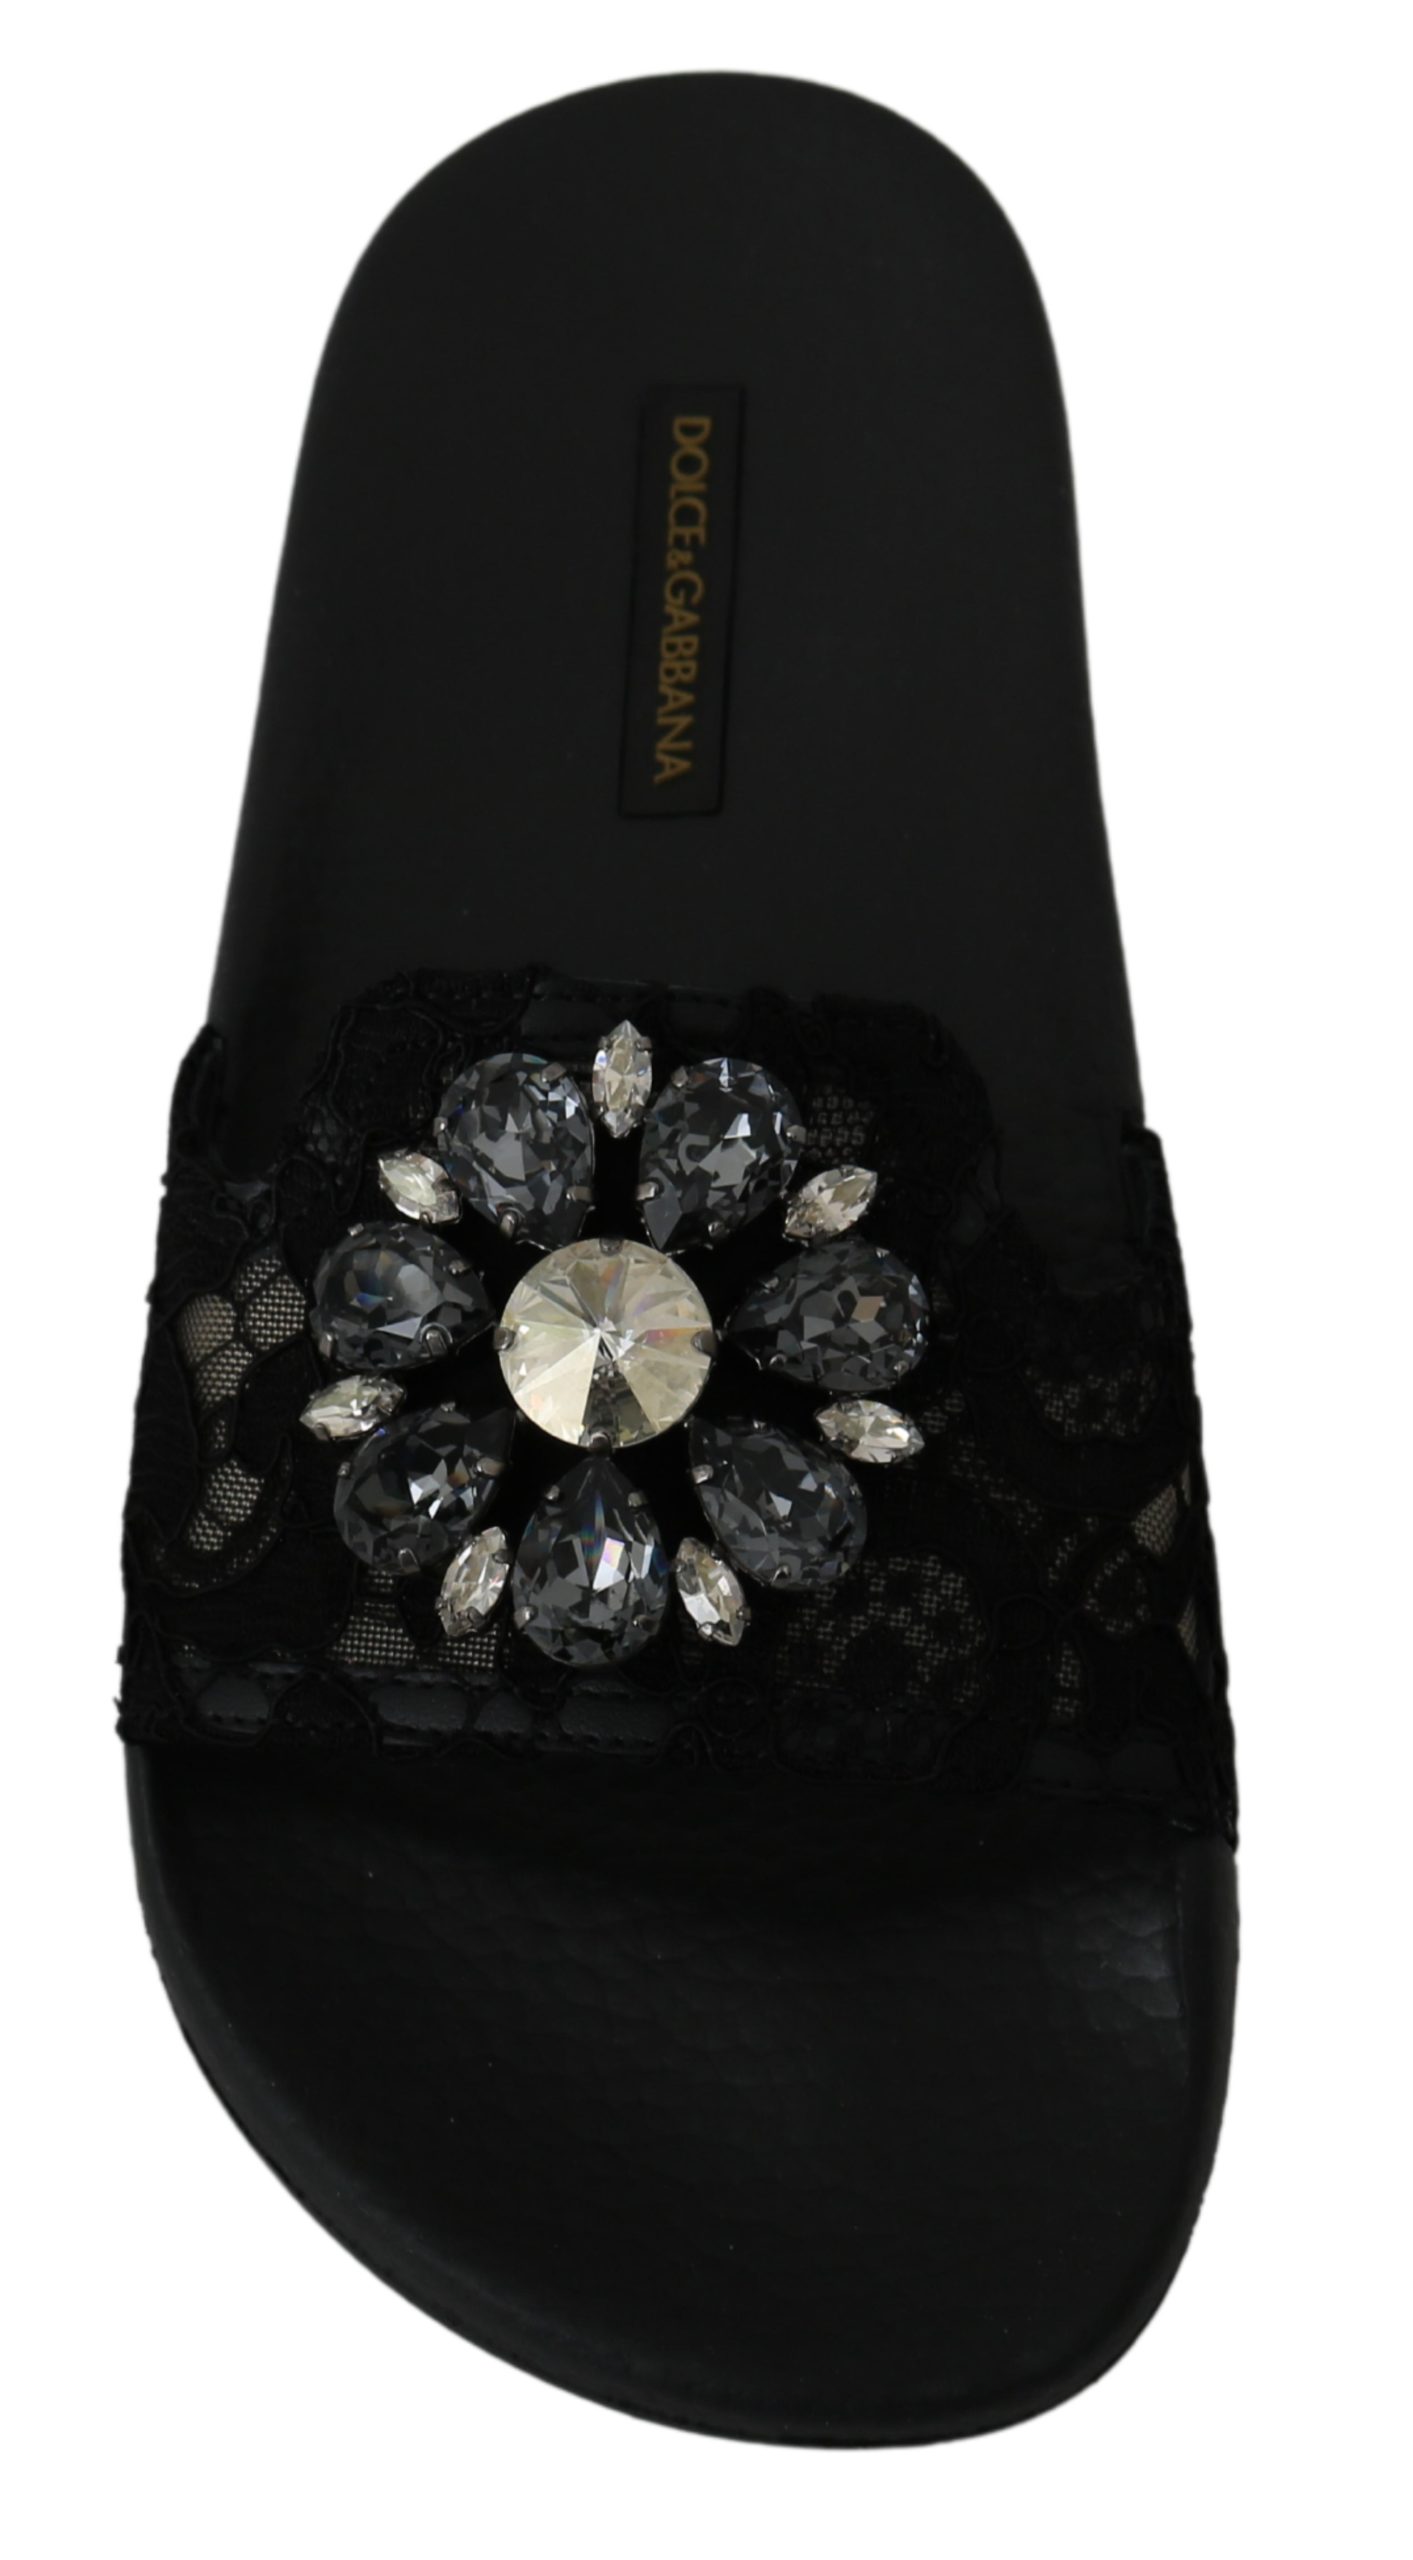 DOLCE & GABBANA Shoes Black Lace Crystal Sandals Slides Beach EU37 US6.5 $660